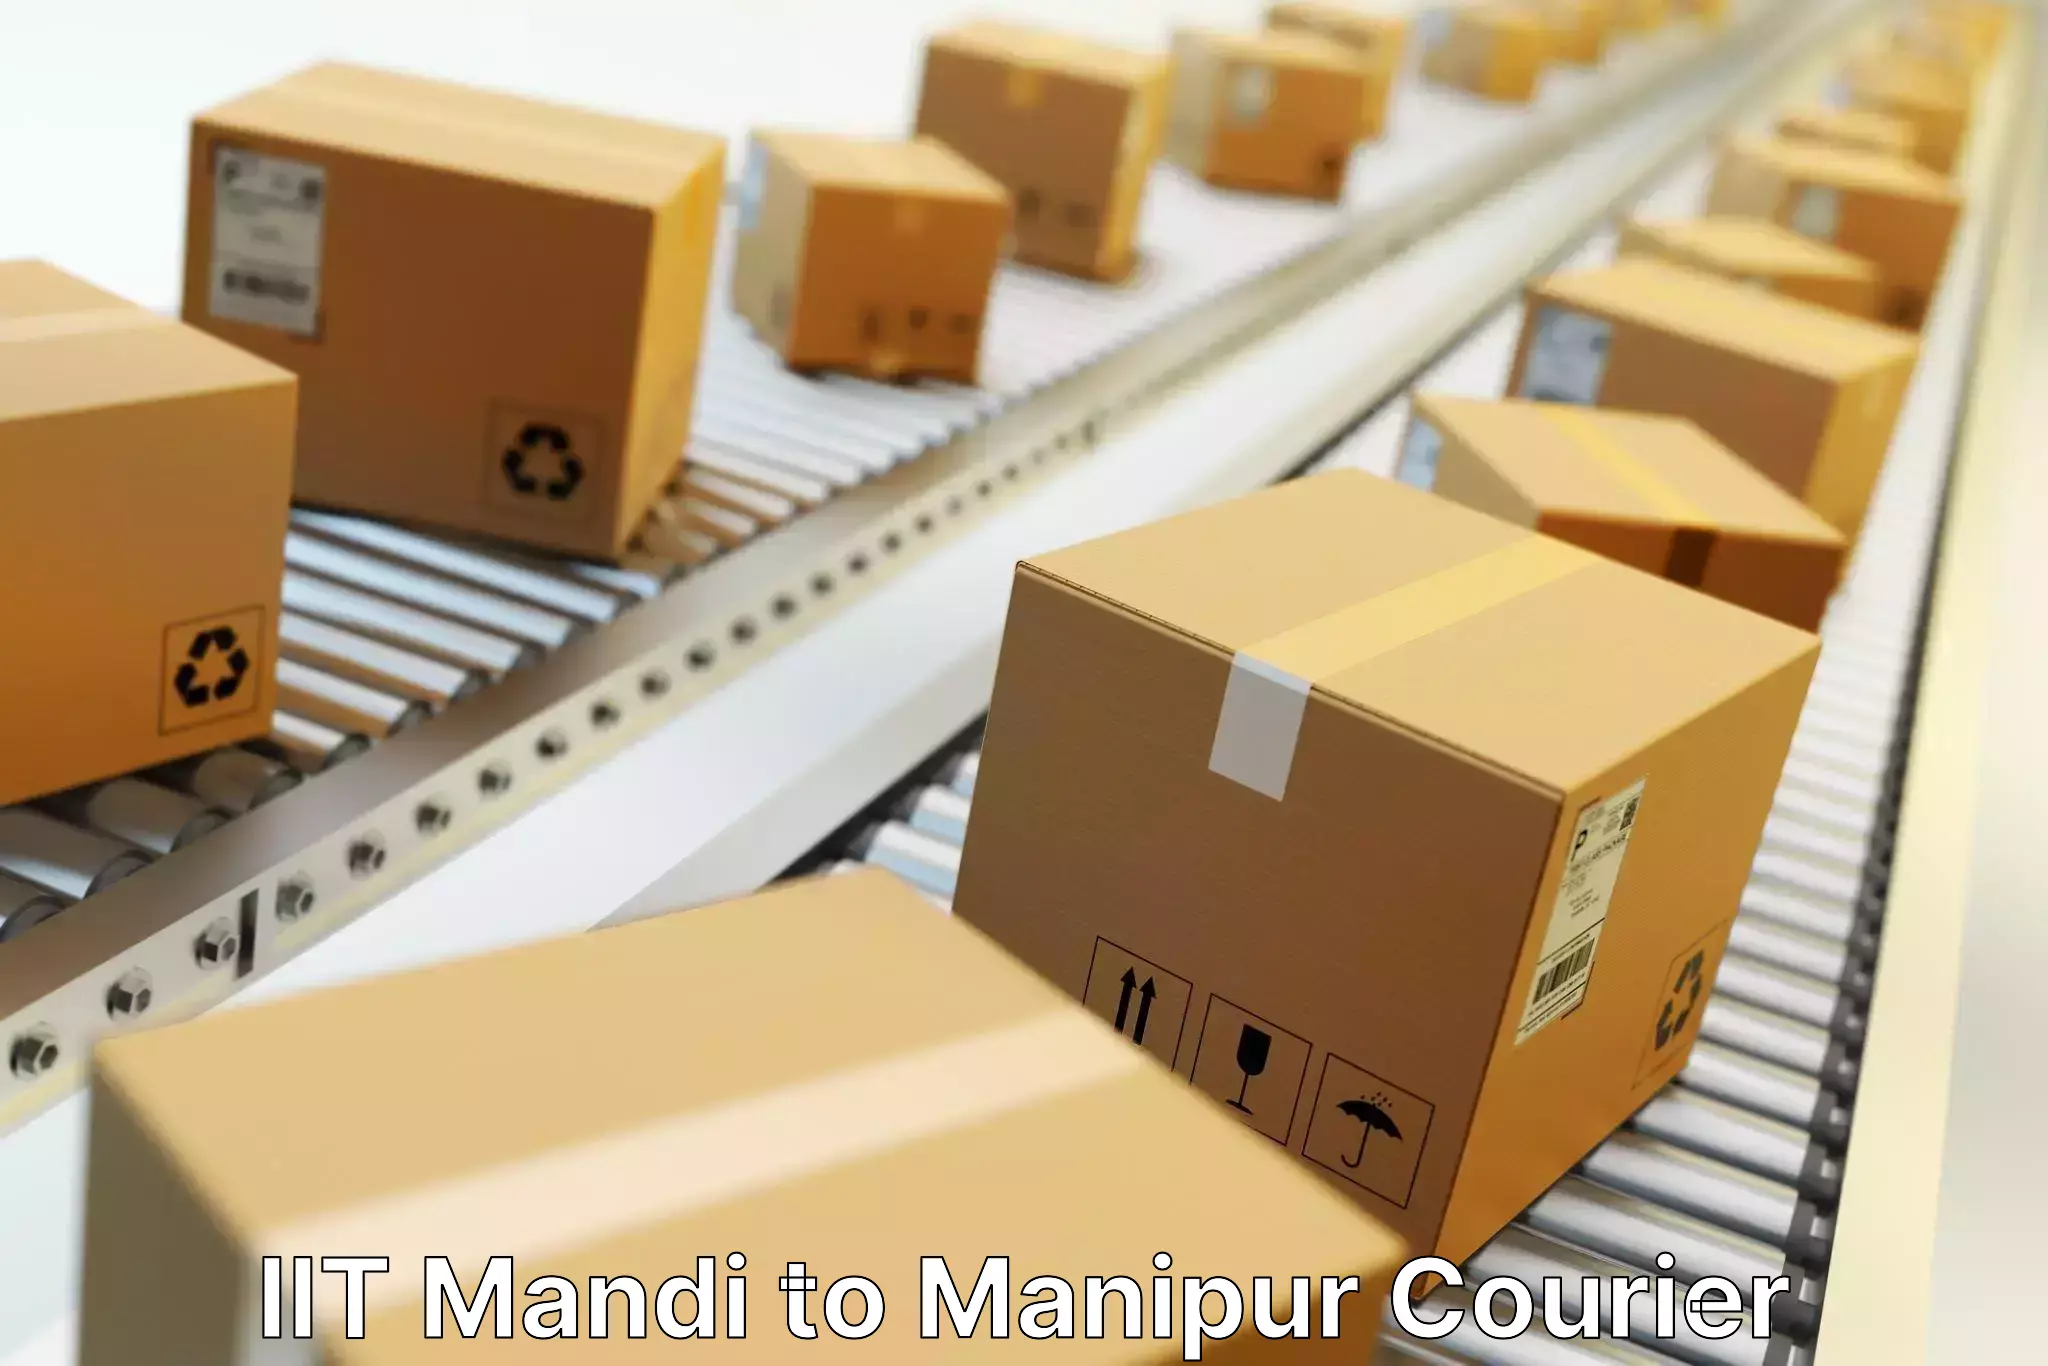 Courier service comparison IIT Mandi to Ukhrul